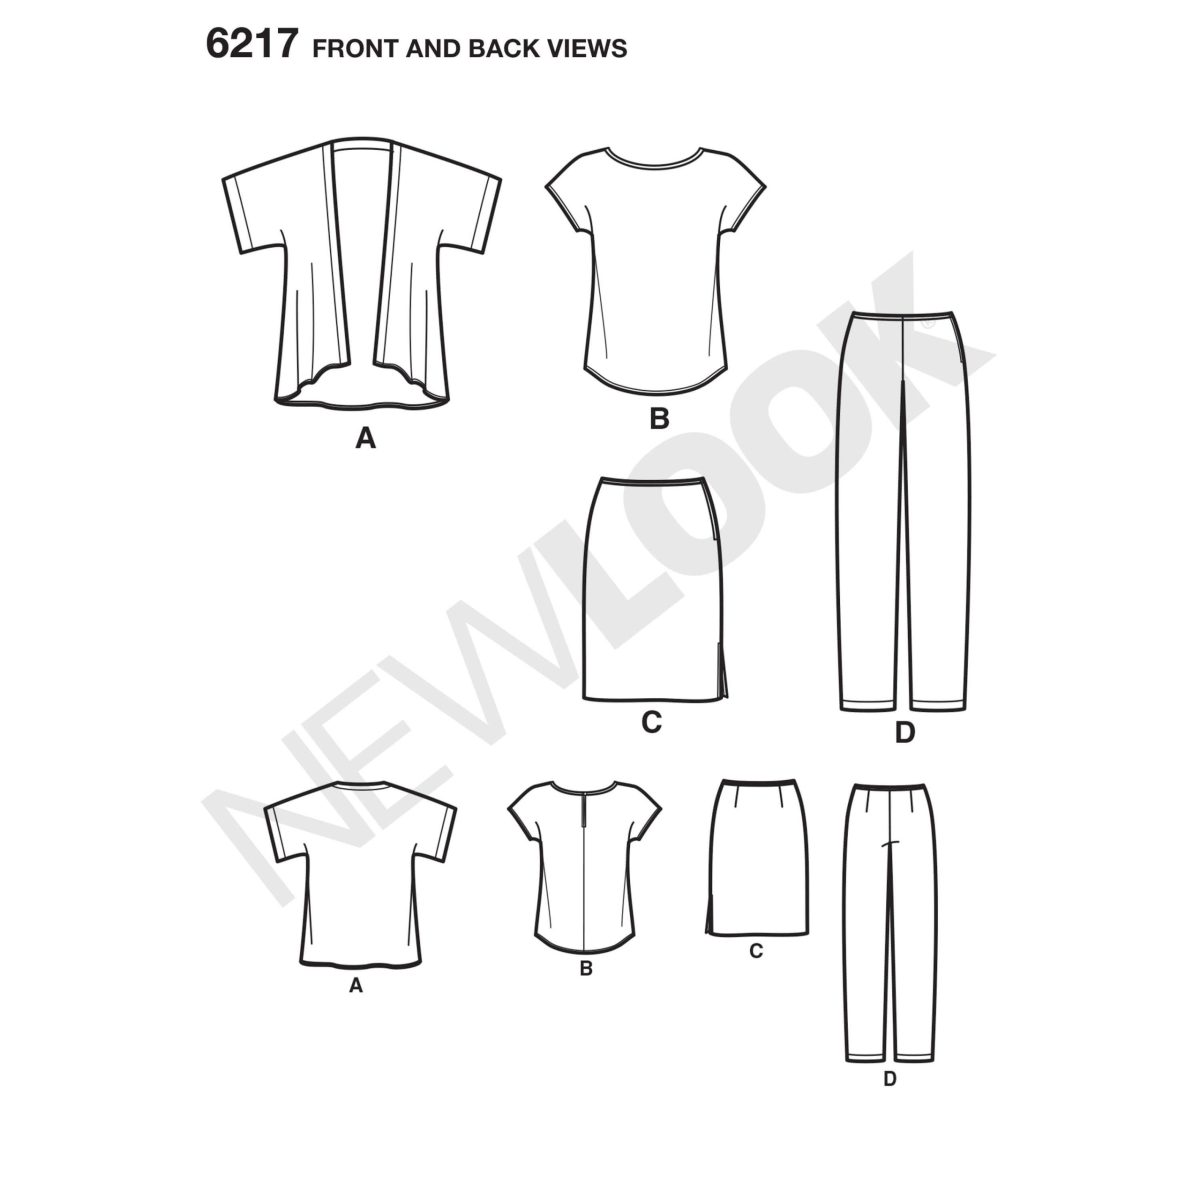 New Look Sewing Pattern N6217 Misses' Coordinates